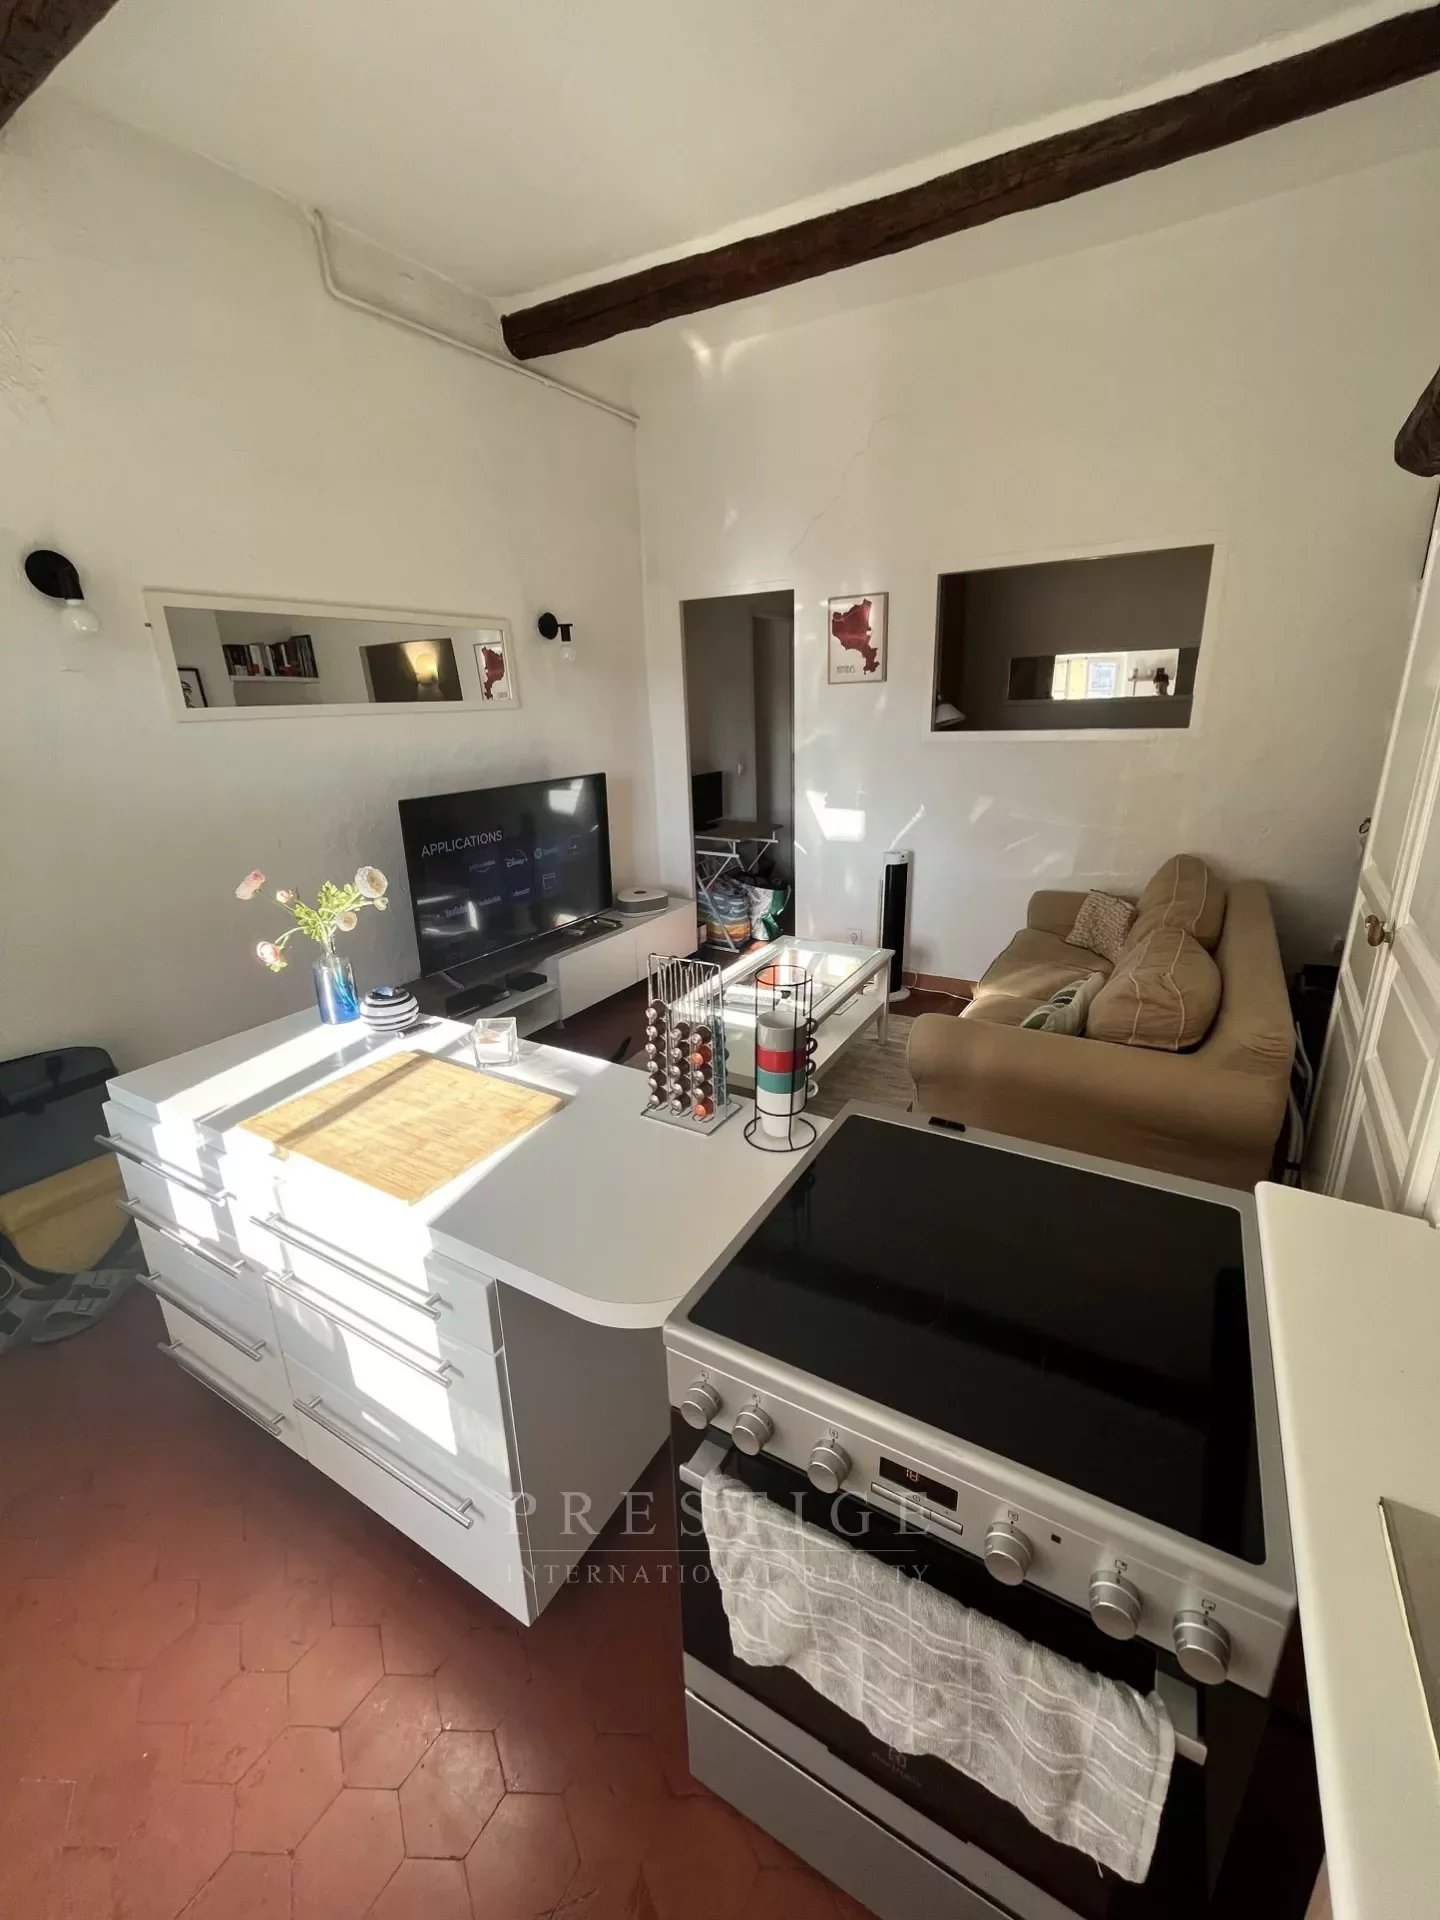 Vente Appartement 30m² 1 Pièce à Antibes (06600) - Agence Prestige International